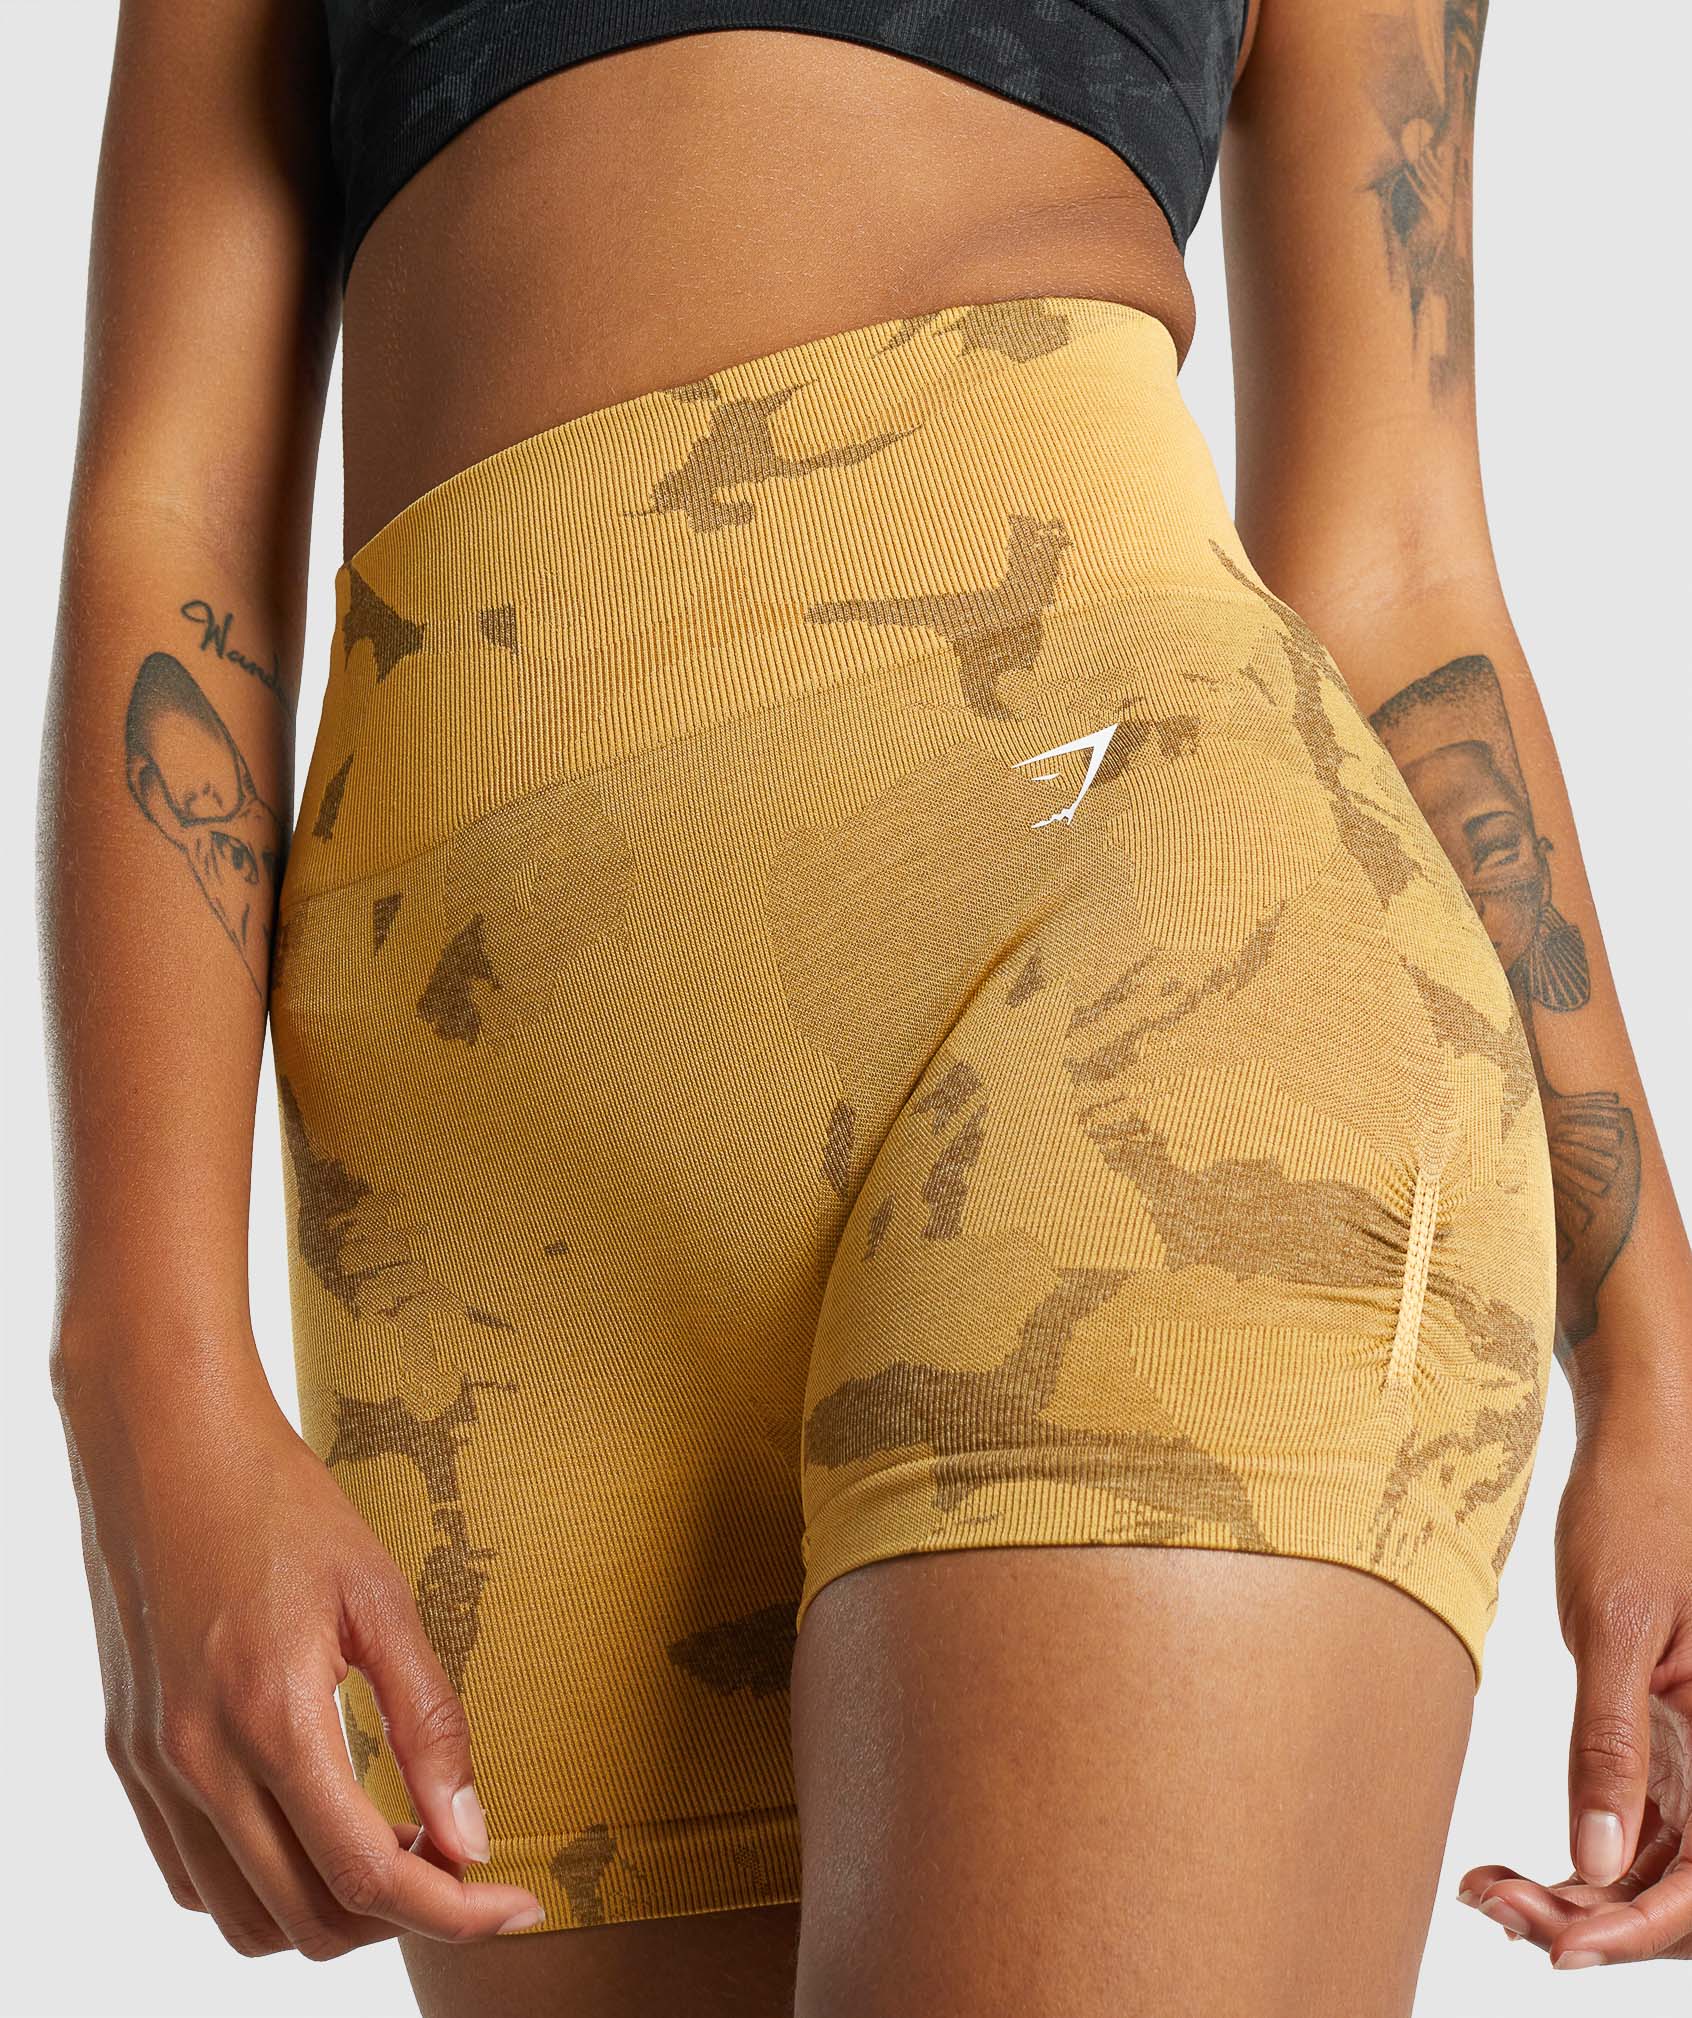 Adapt Camo Seamless Shorts in Savanna | Yellow